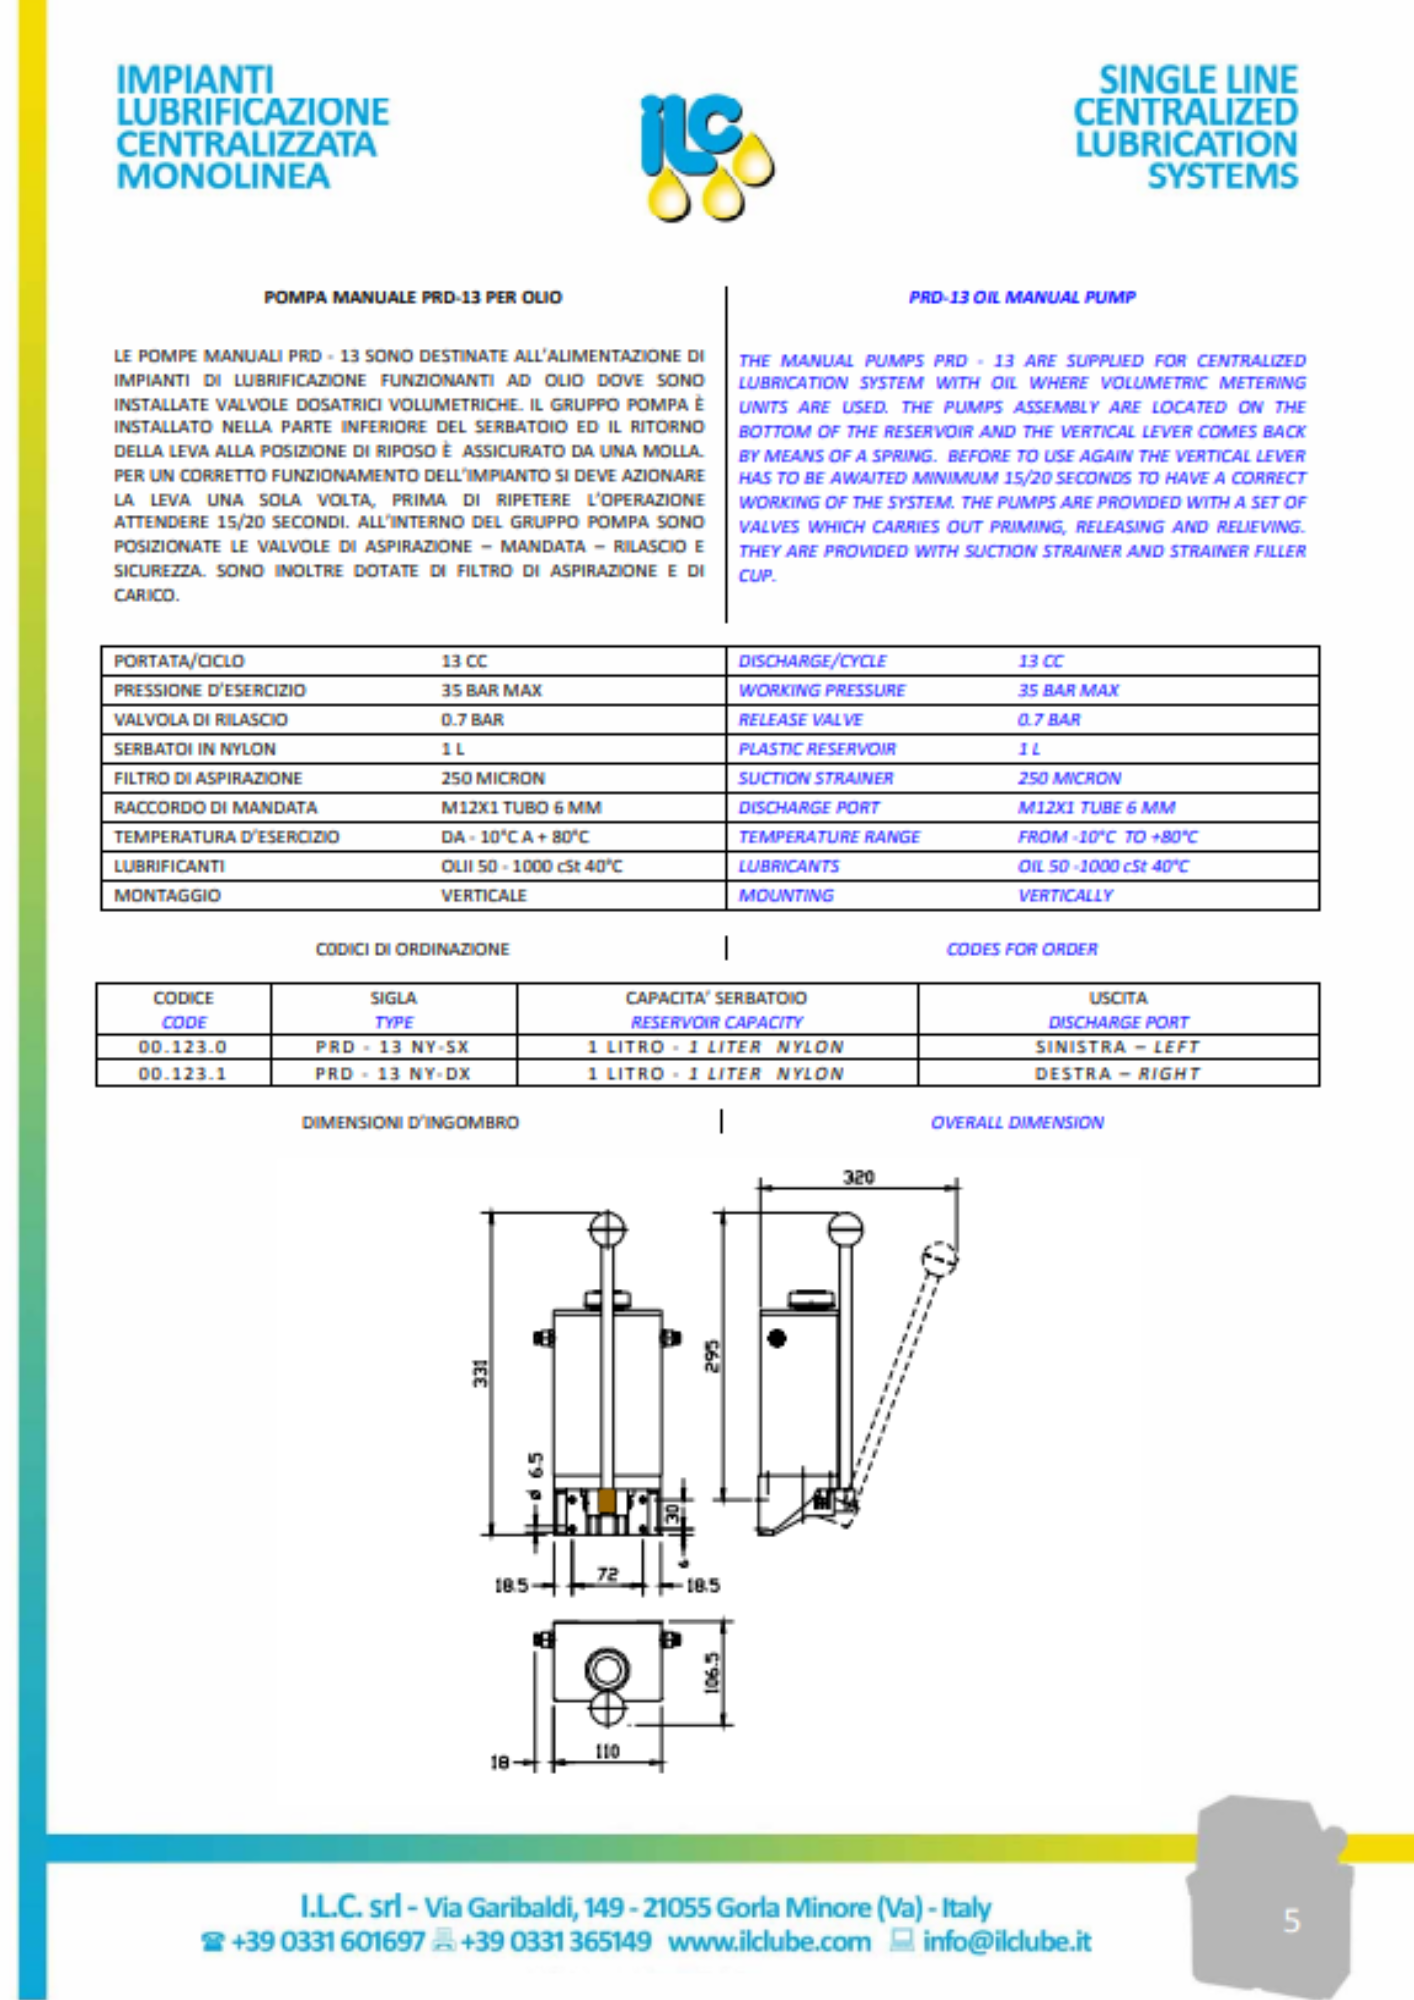 ILC: volumetric lubrication PRD series catalogue